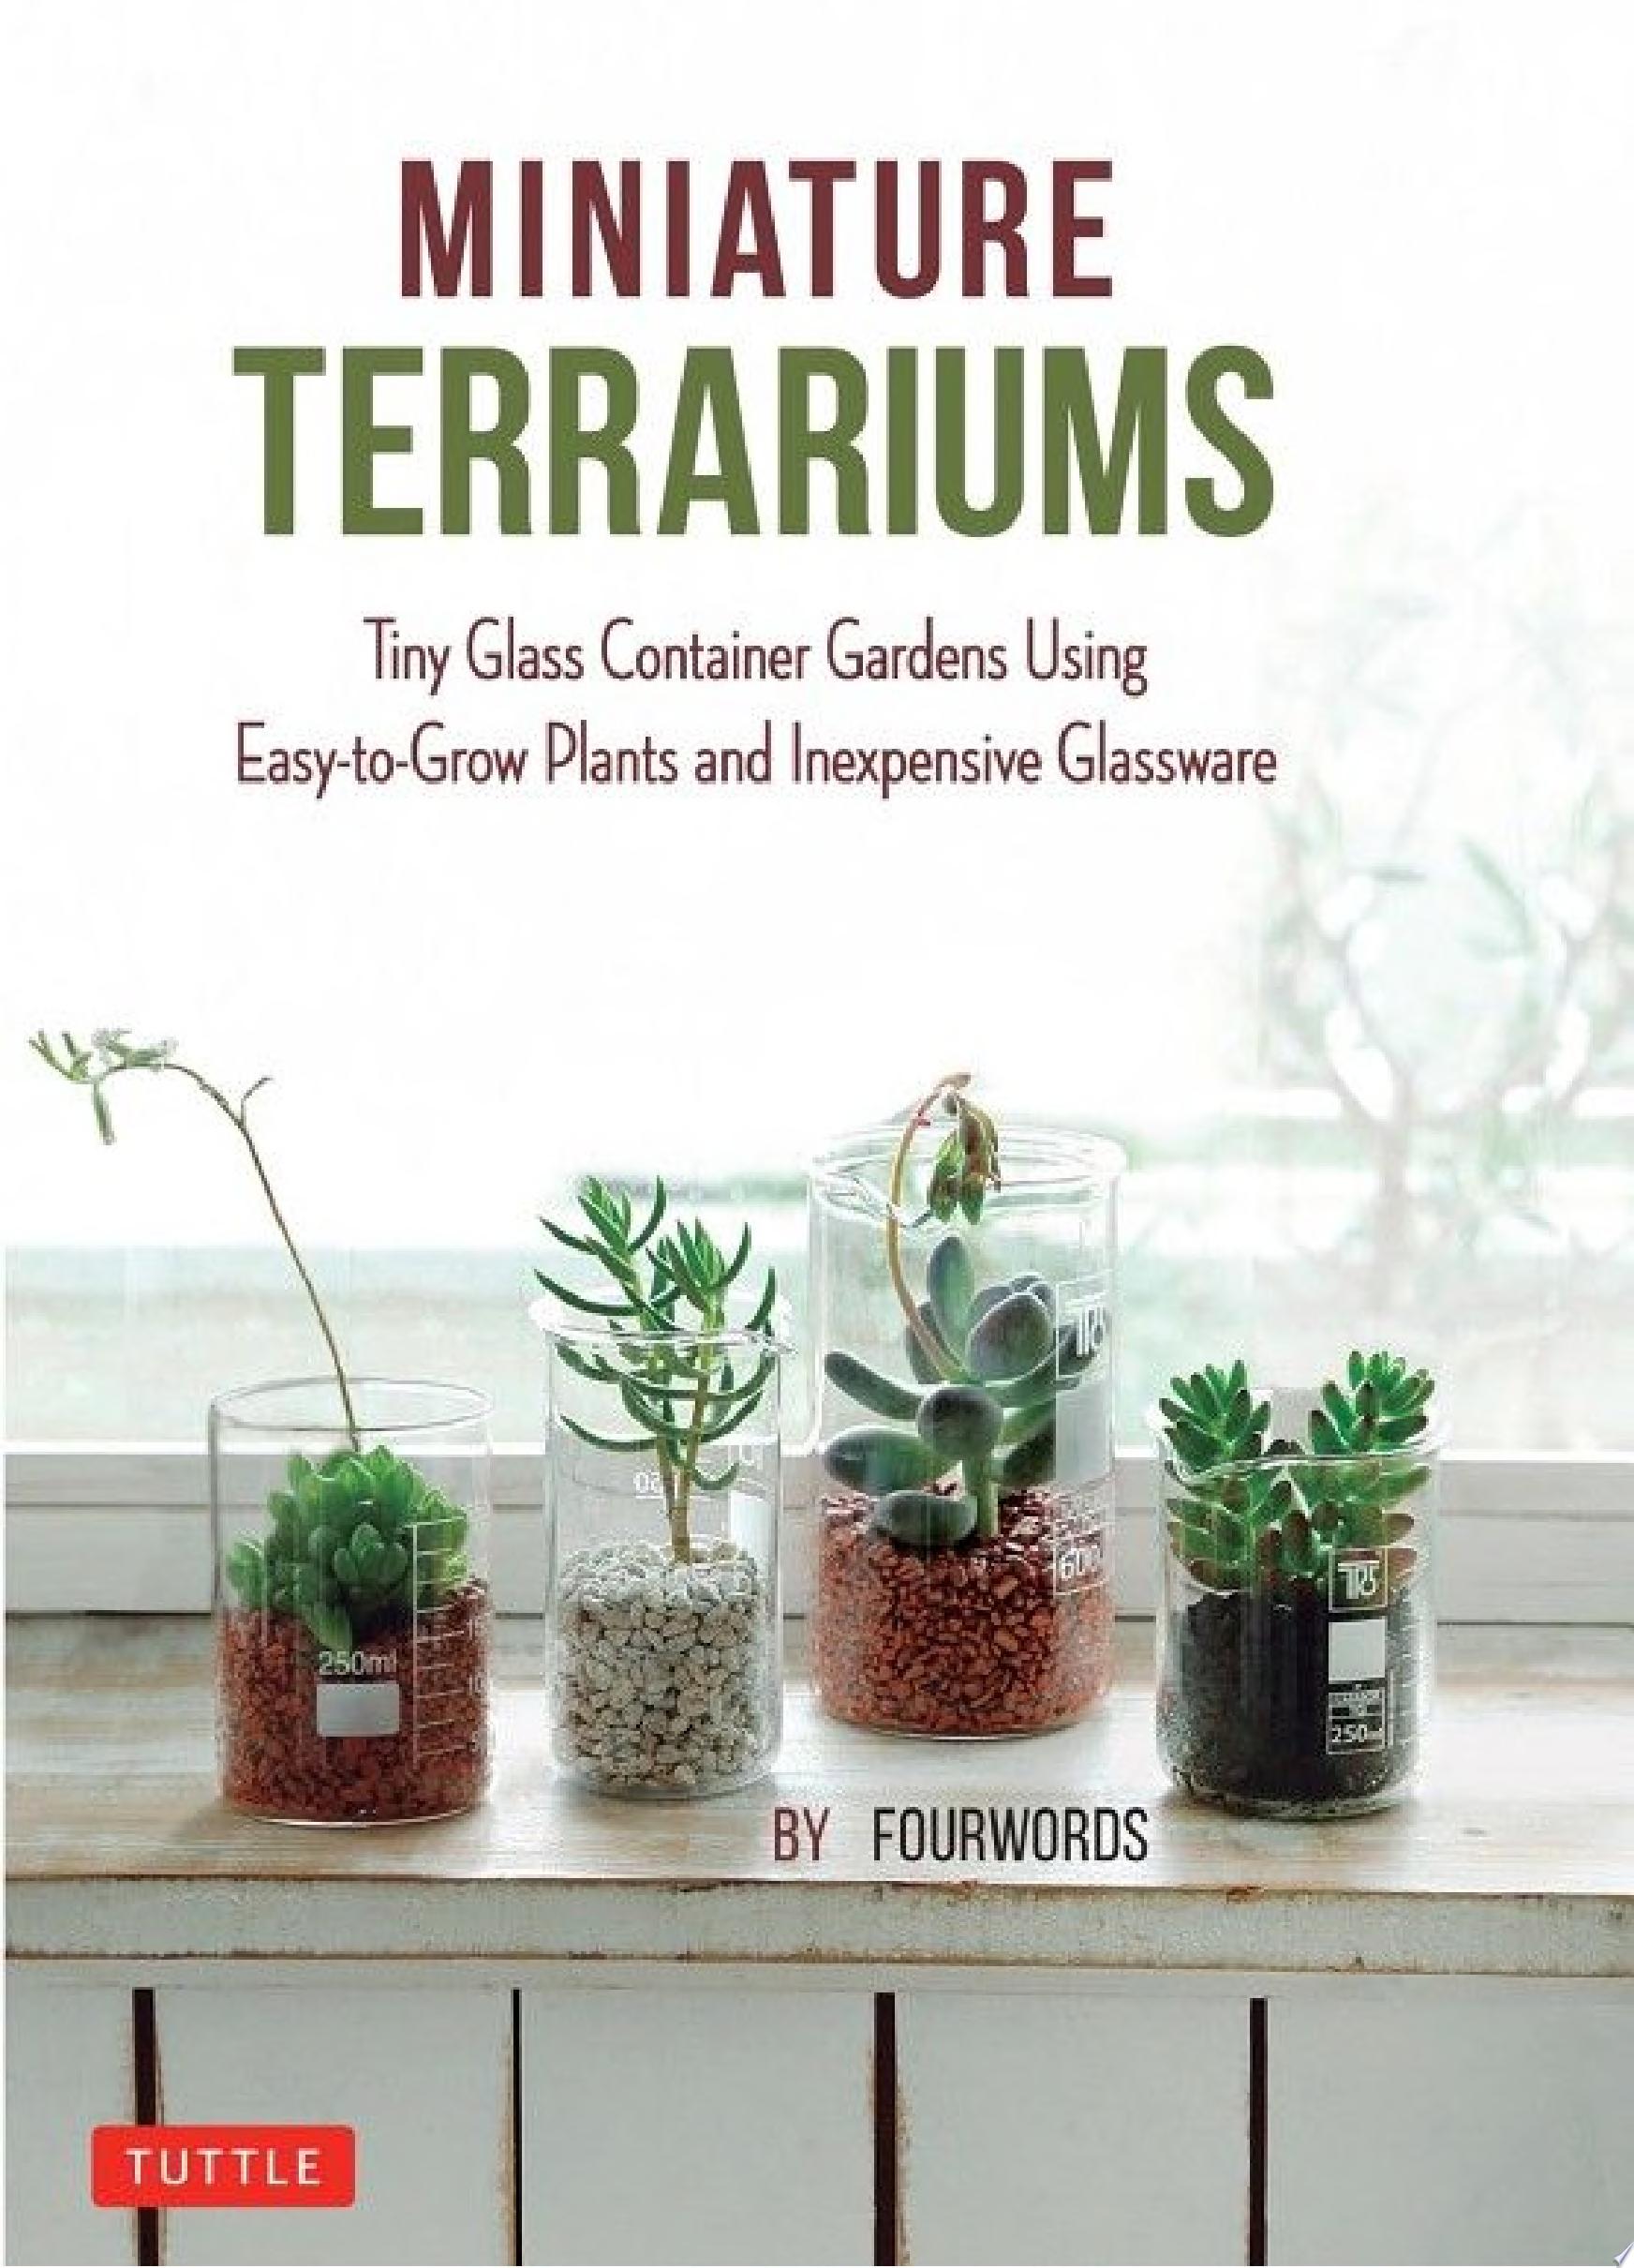 Image for "Miniature Terrariums"